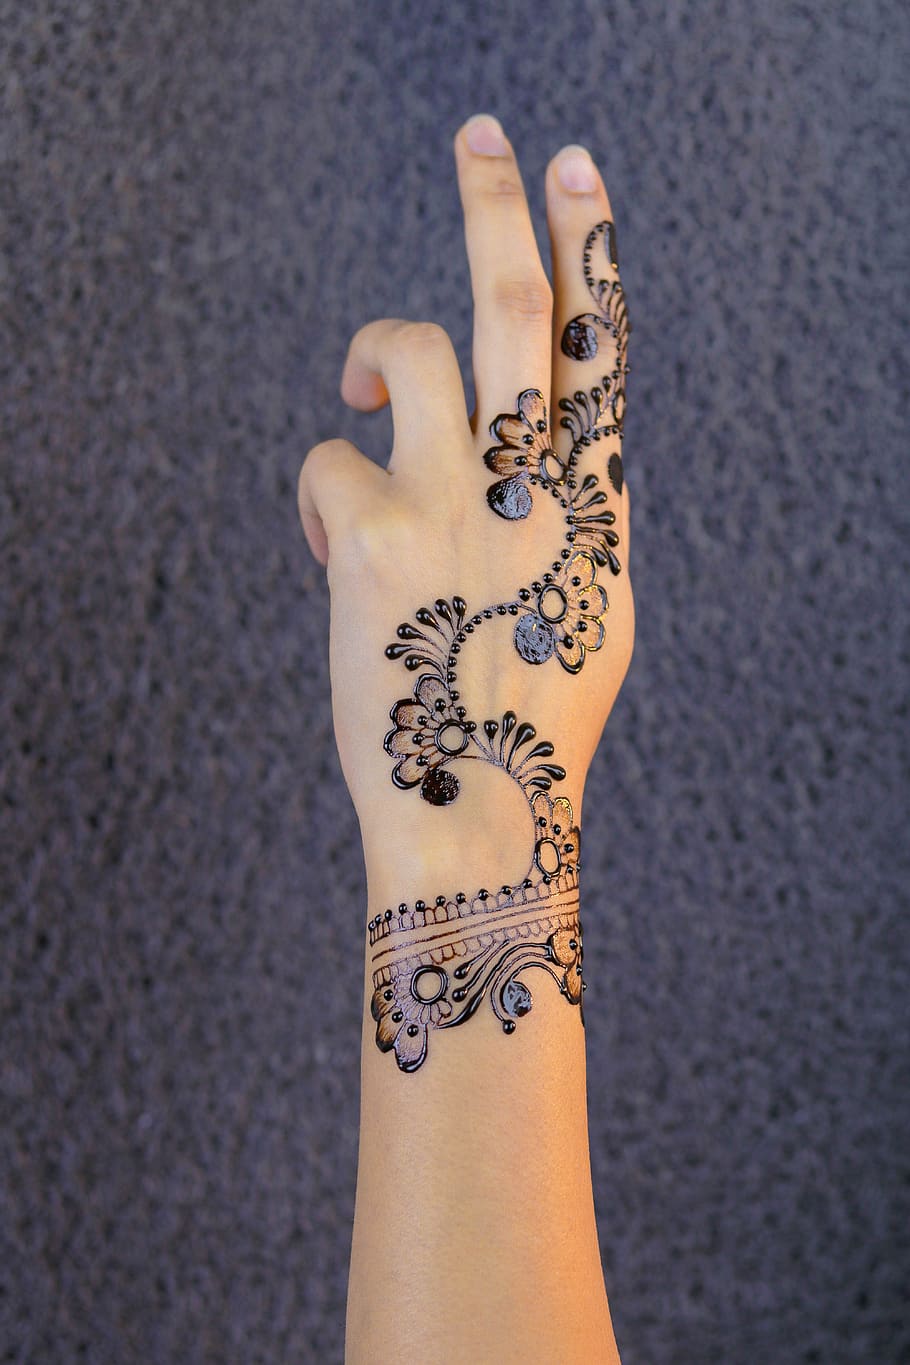 henna, bride, wedding, culture, fashion, marriage, woman, mehendi, traditional, ritual